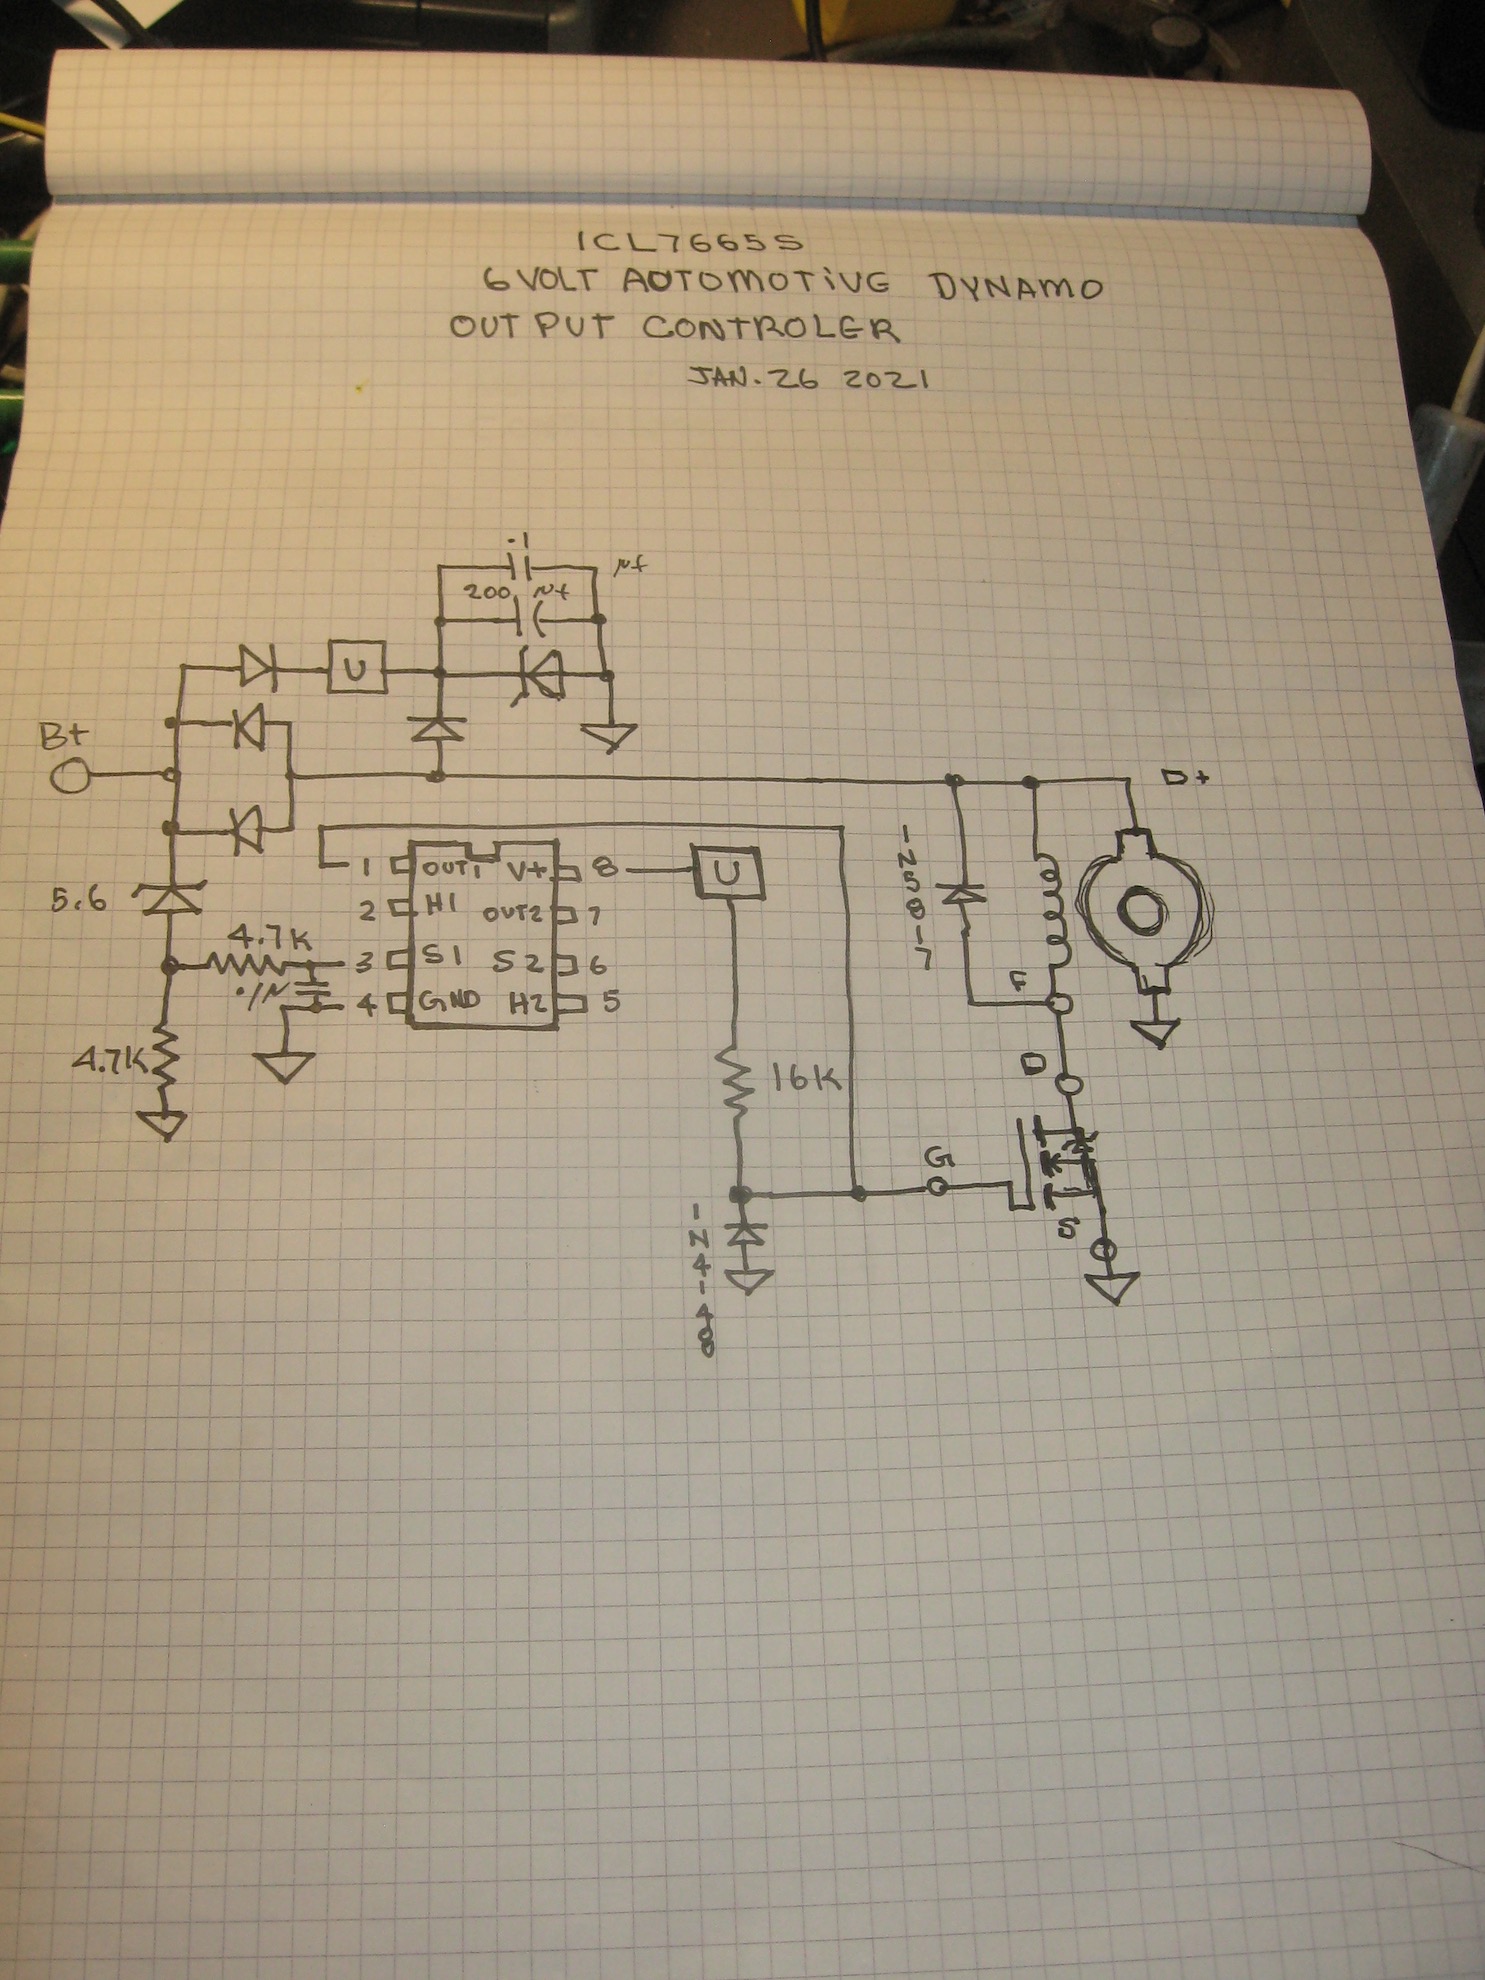 Schematic ICL7665s Voltage Regulator.jpeg